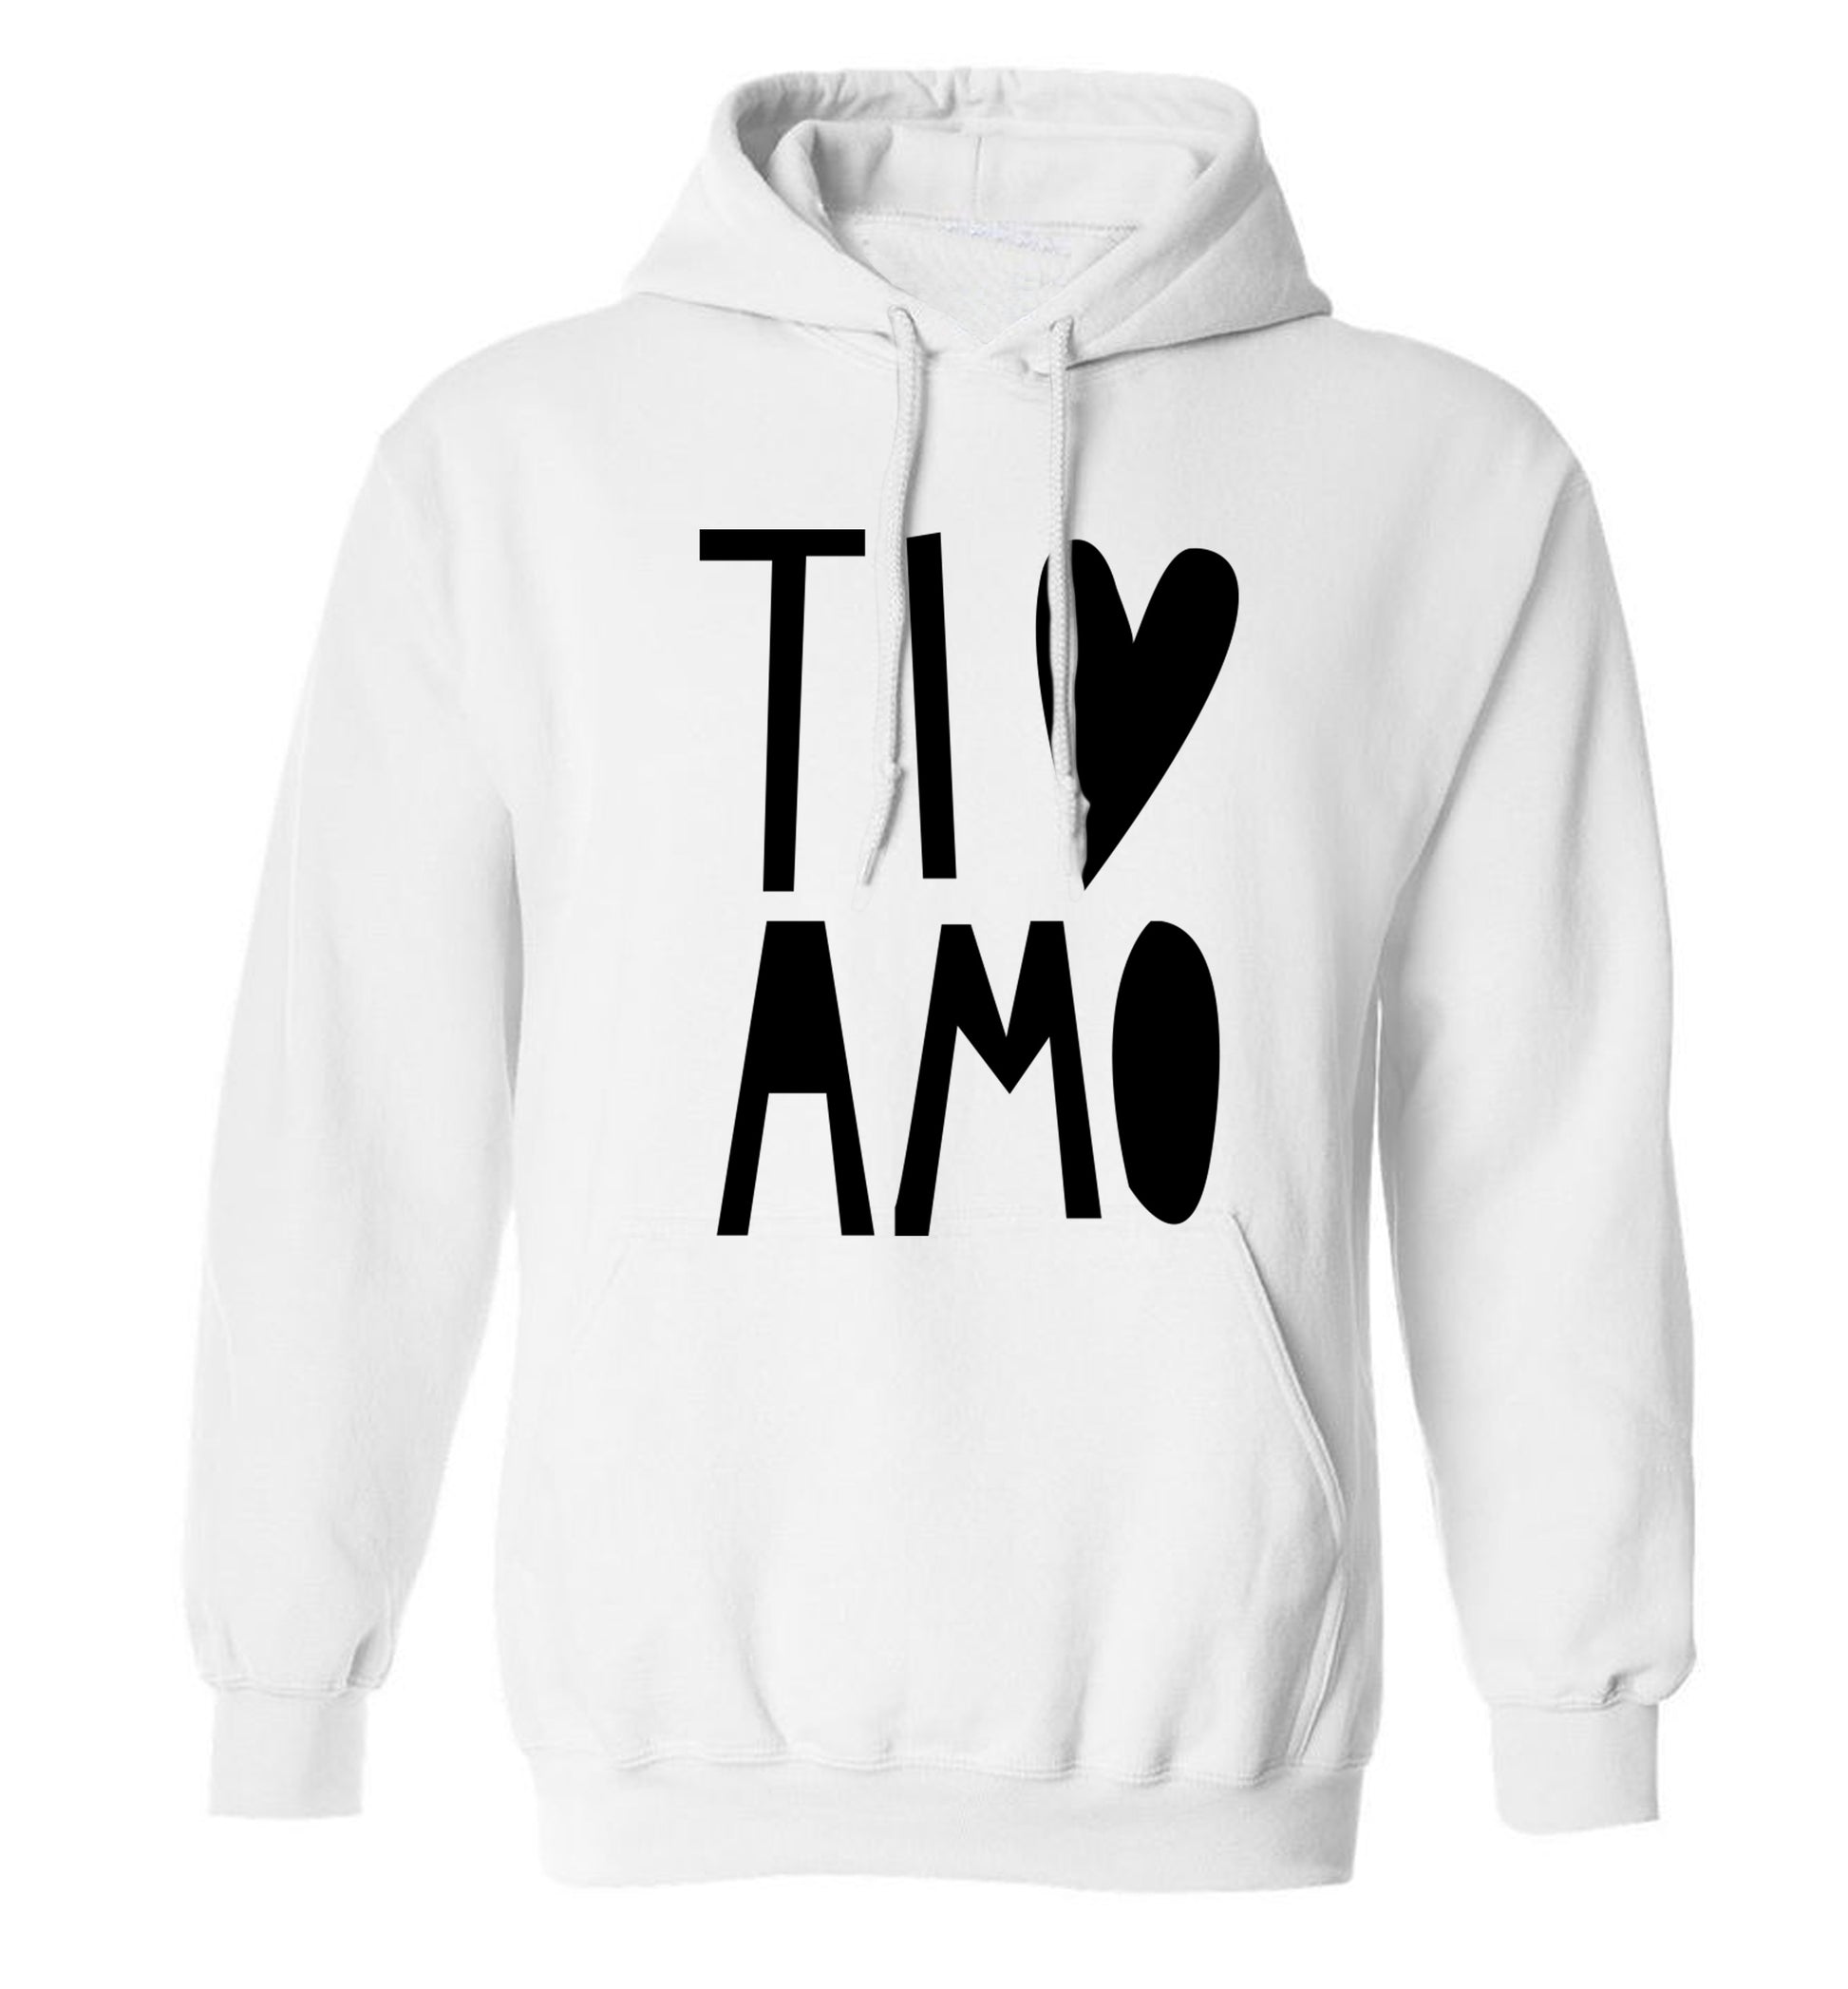 Ti amo - I love you adults unisex white hoodie 2XL